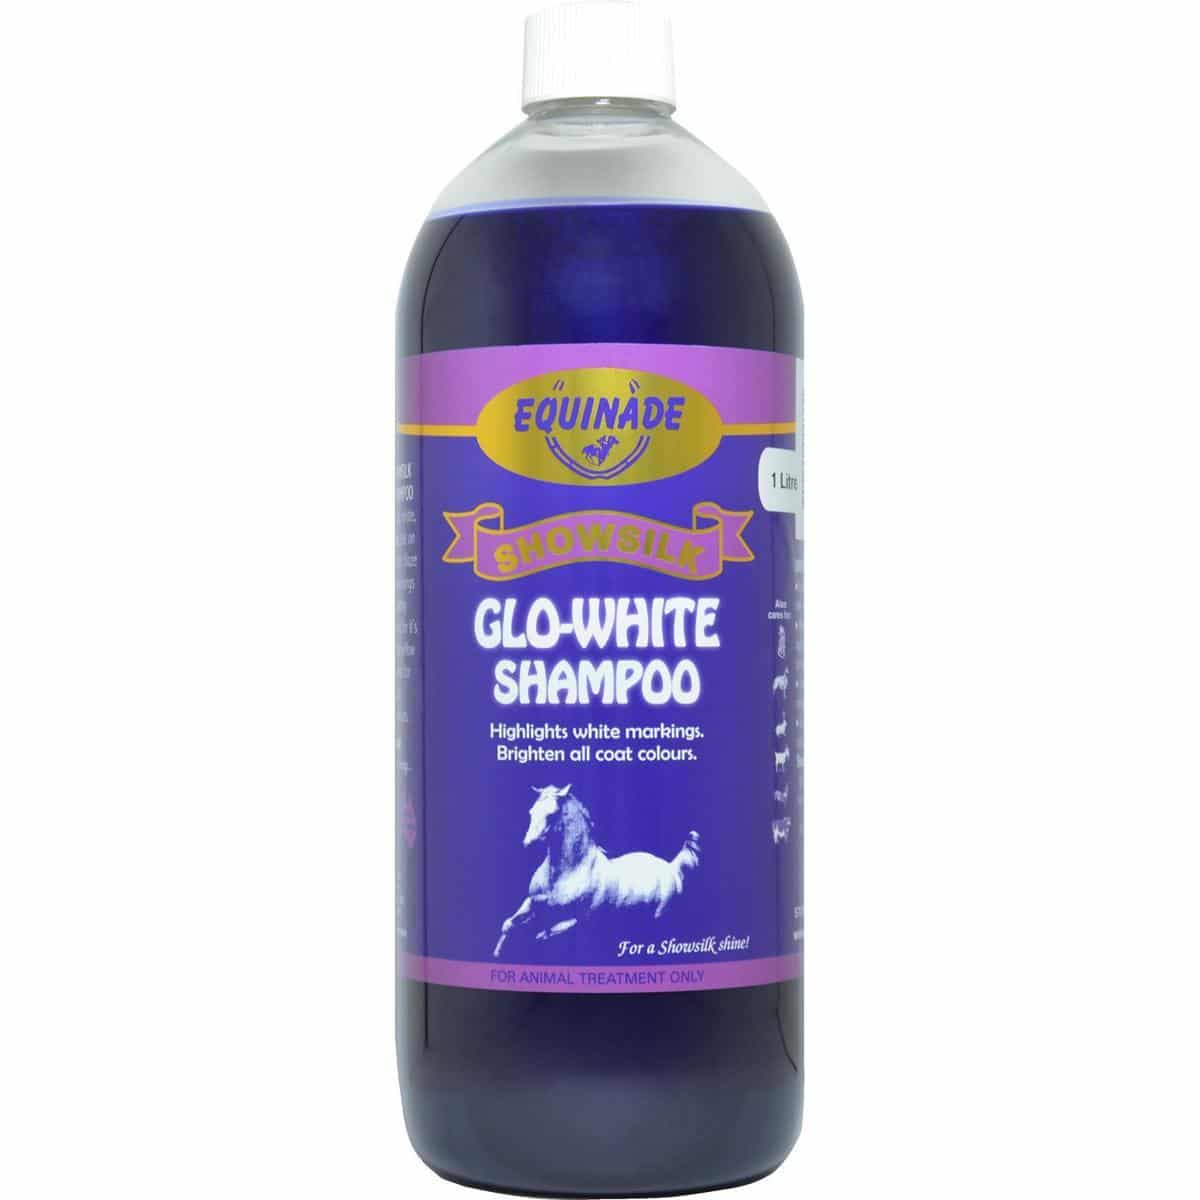 Equinade Glo-White Shampoo